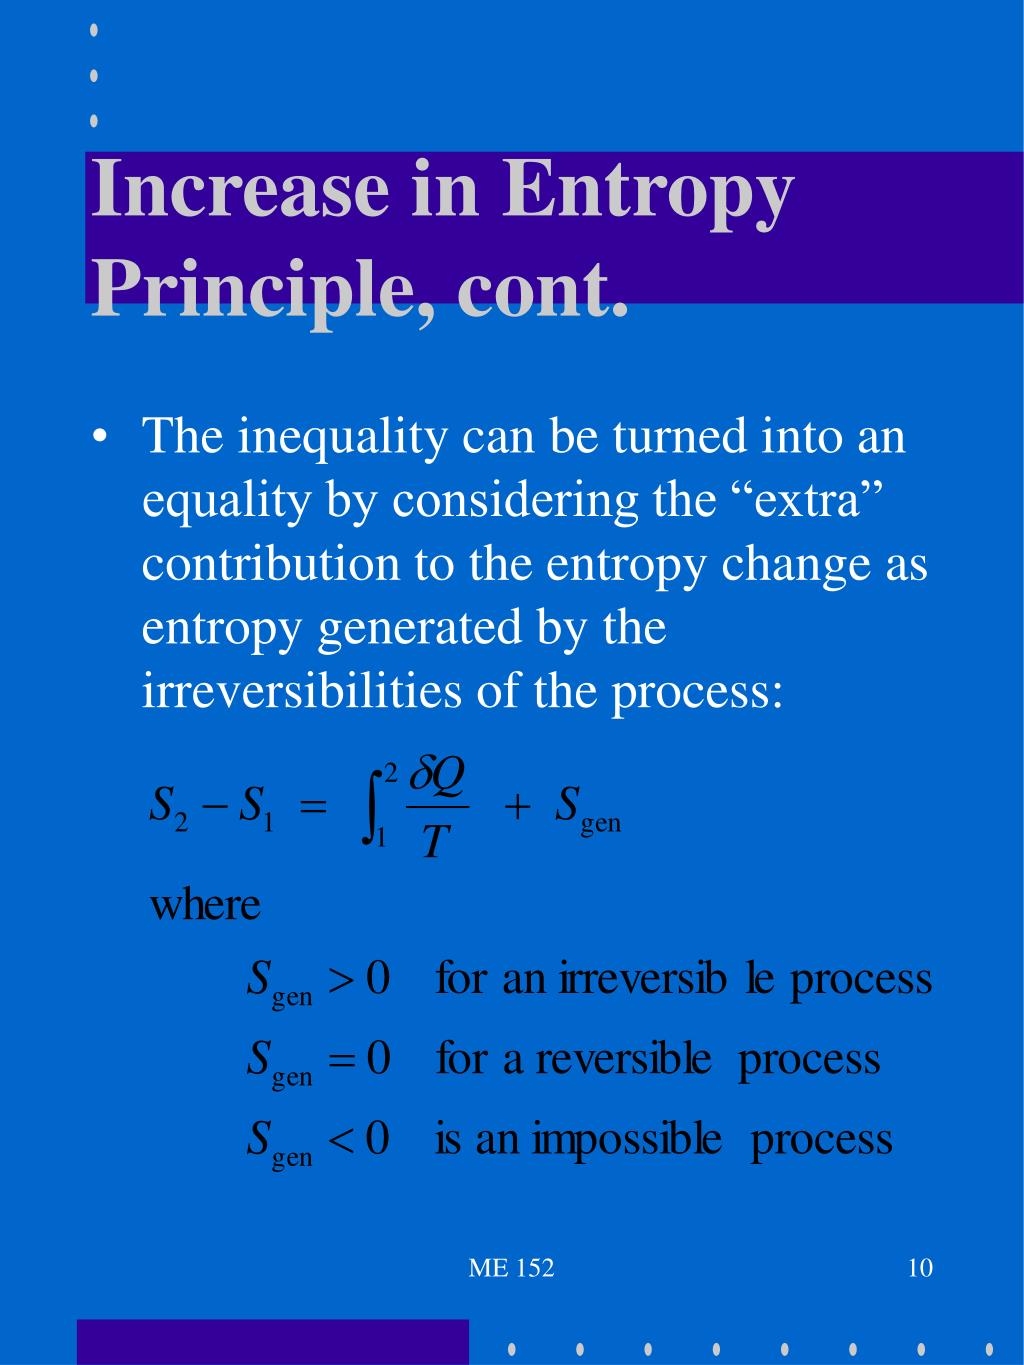 when does entropy increase